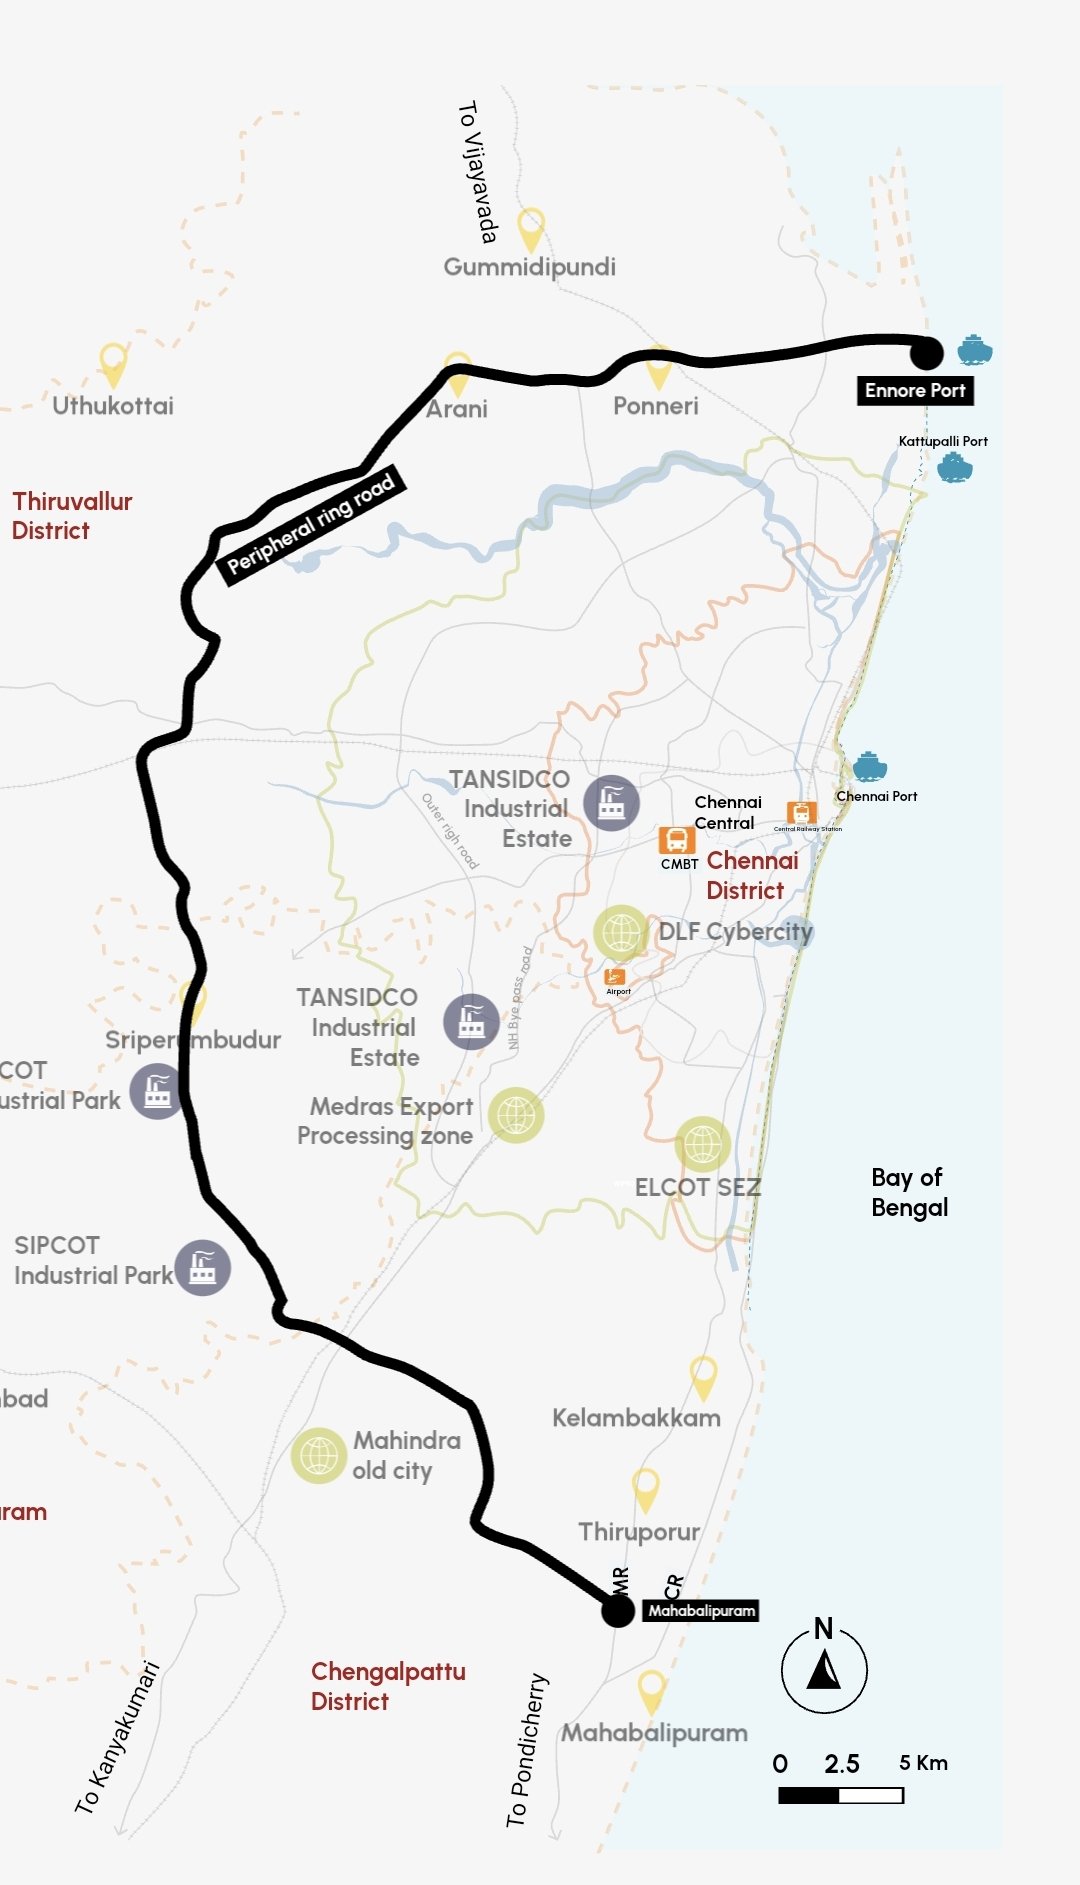 Chennai Peripheral Ring Road work gets a boost - The Hindu